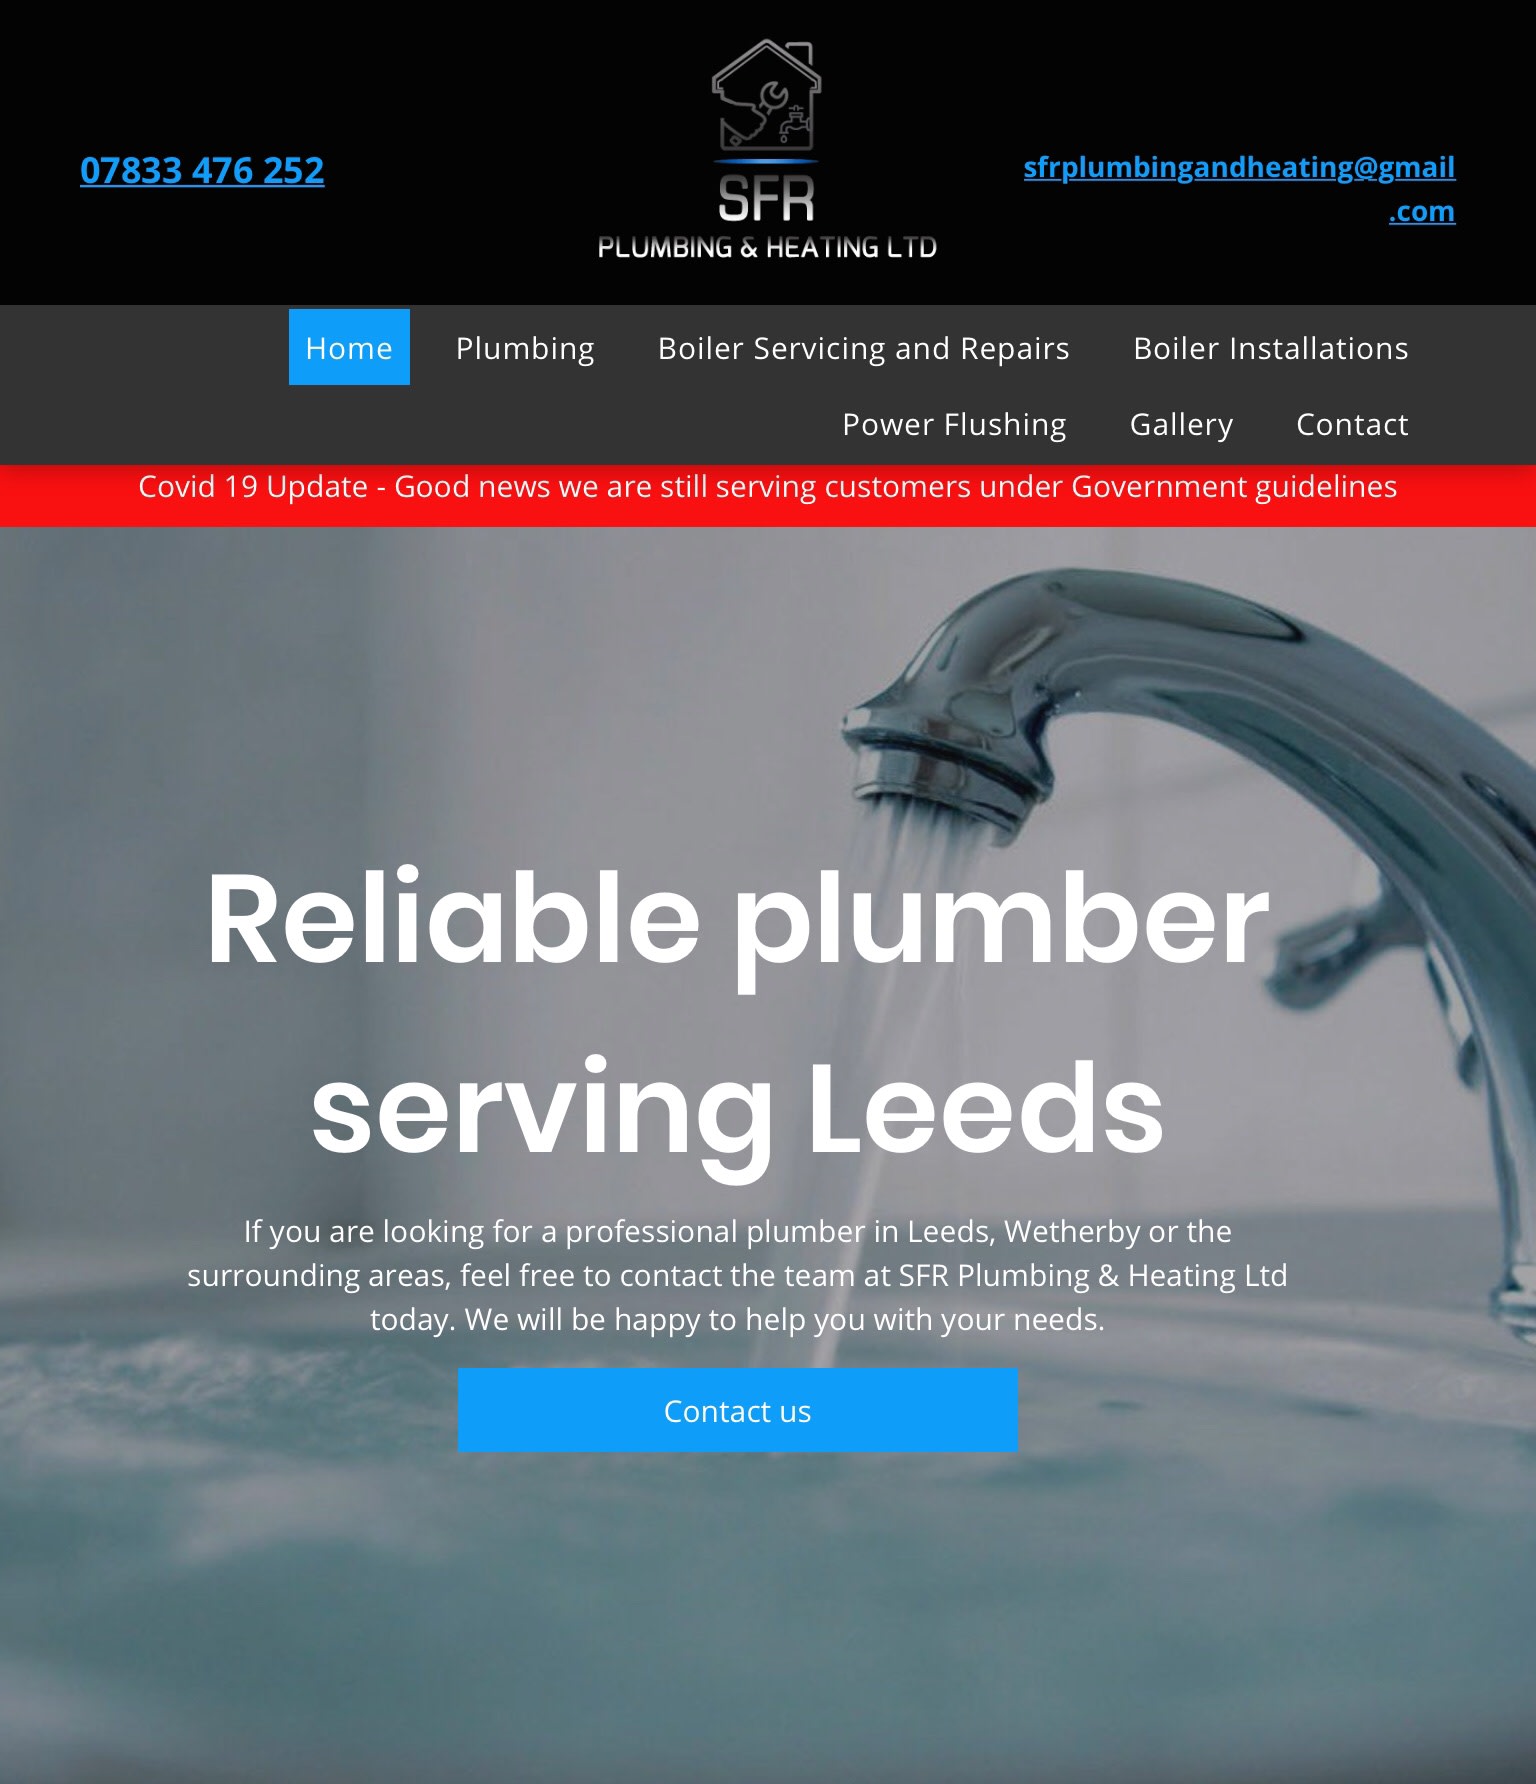 Images SFR Plumbing & Heating Ltd